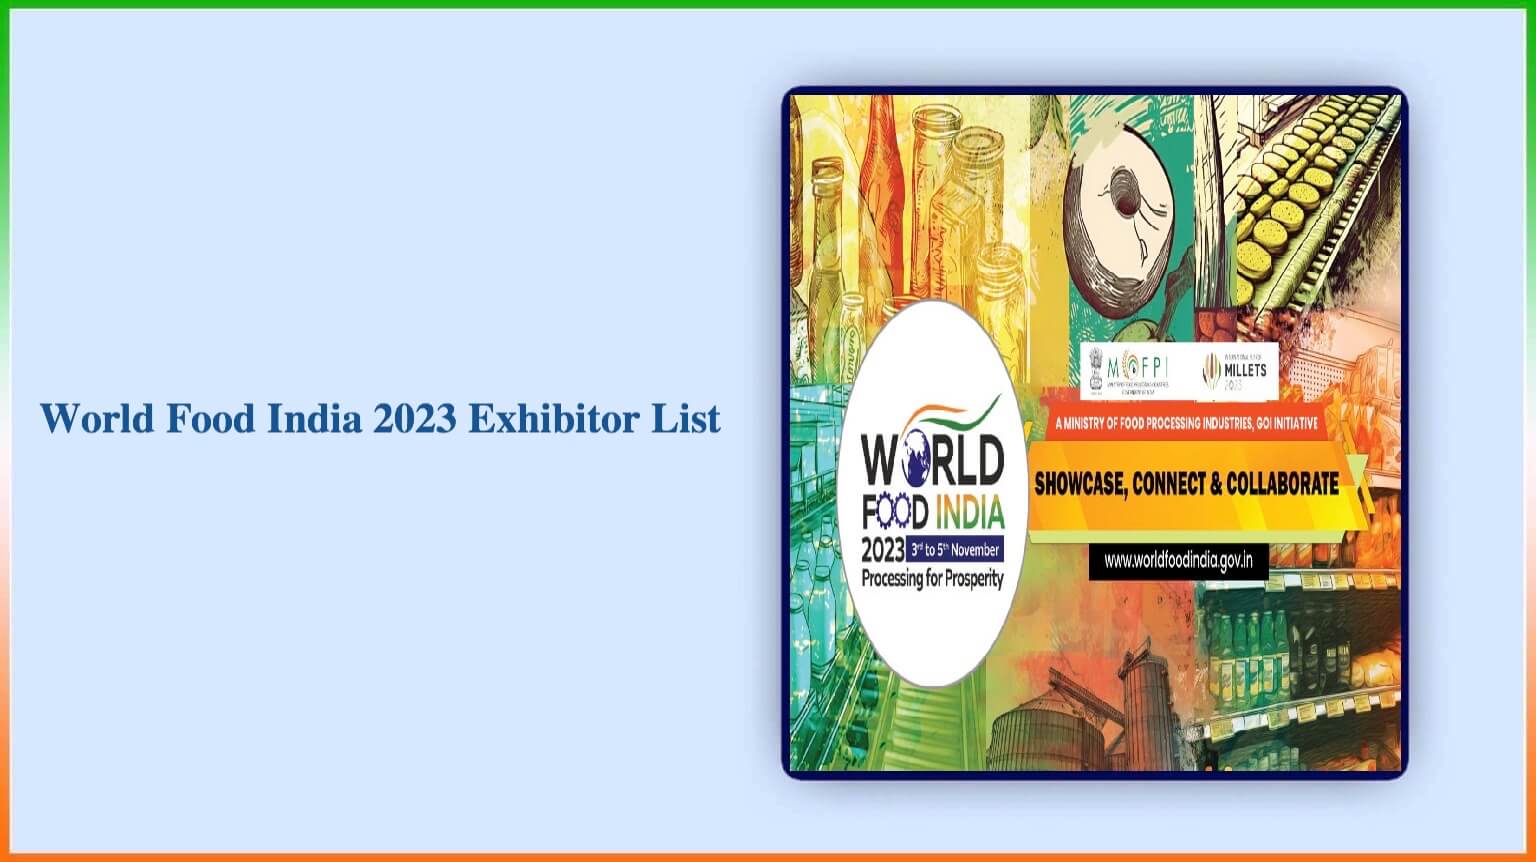 World Food India 2023 Exhibitor List